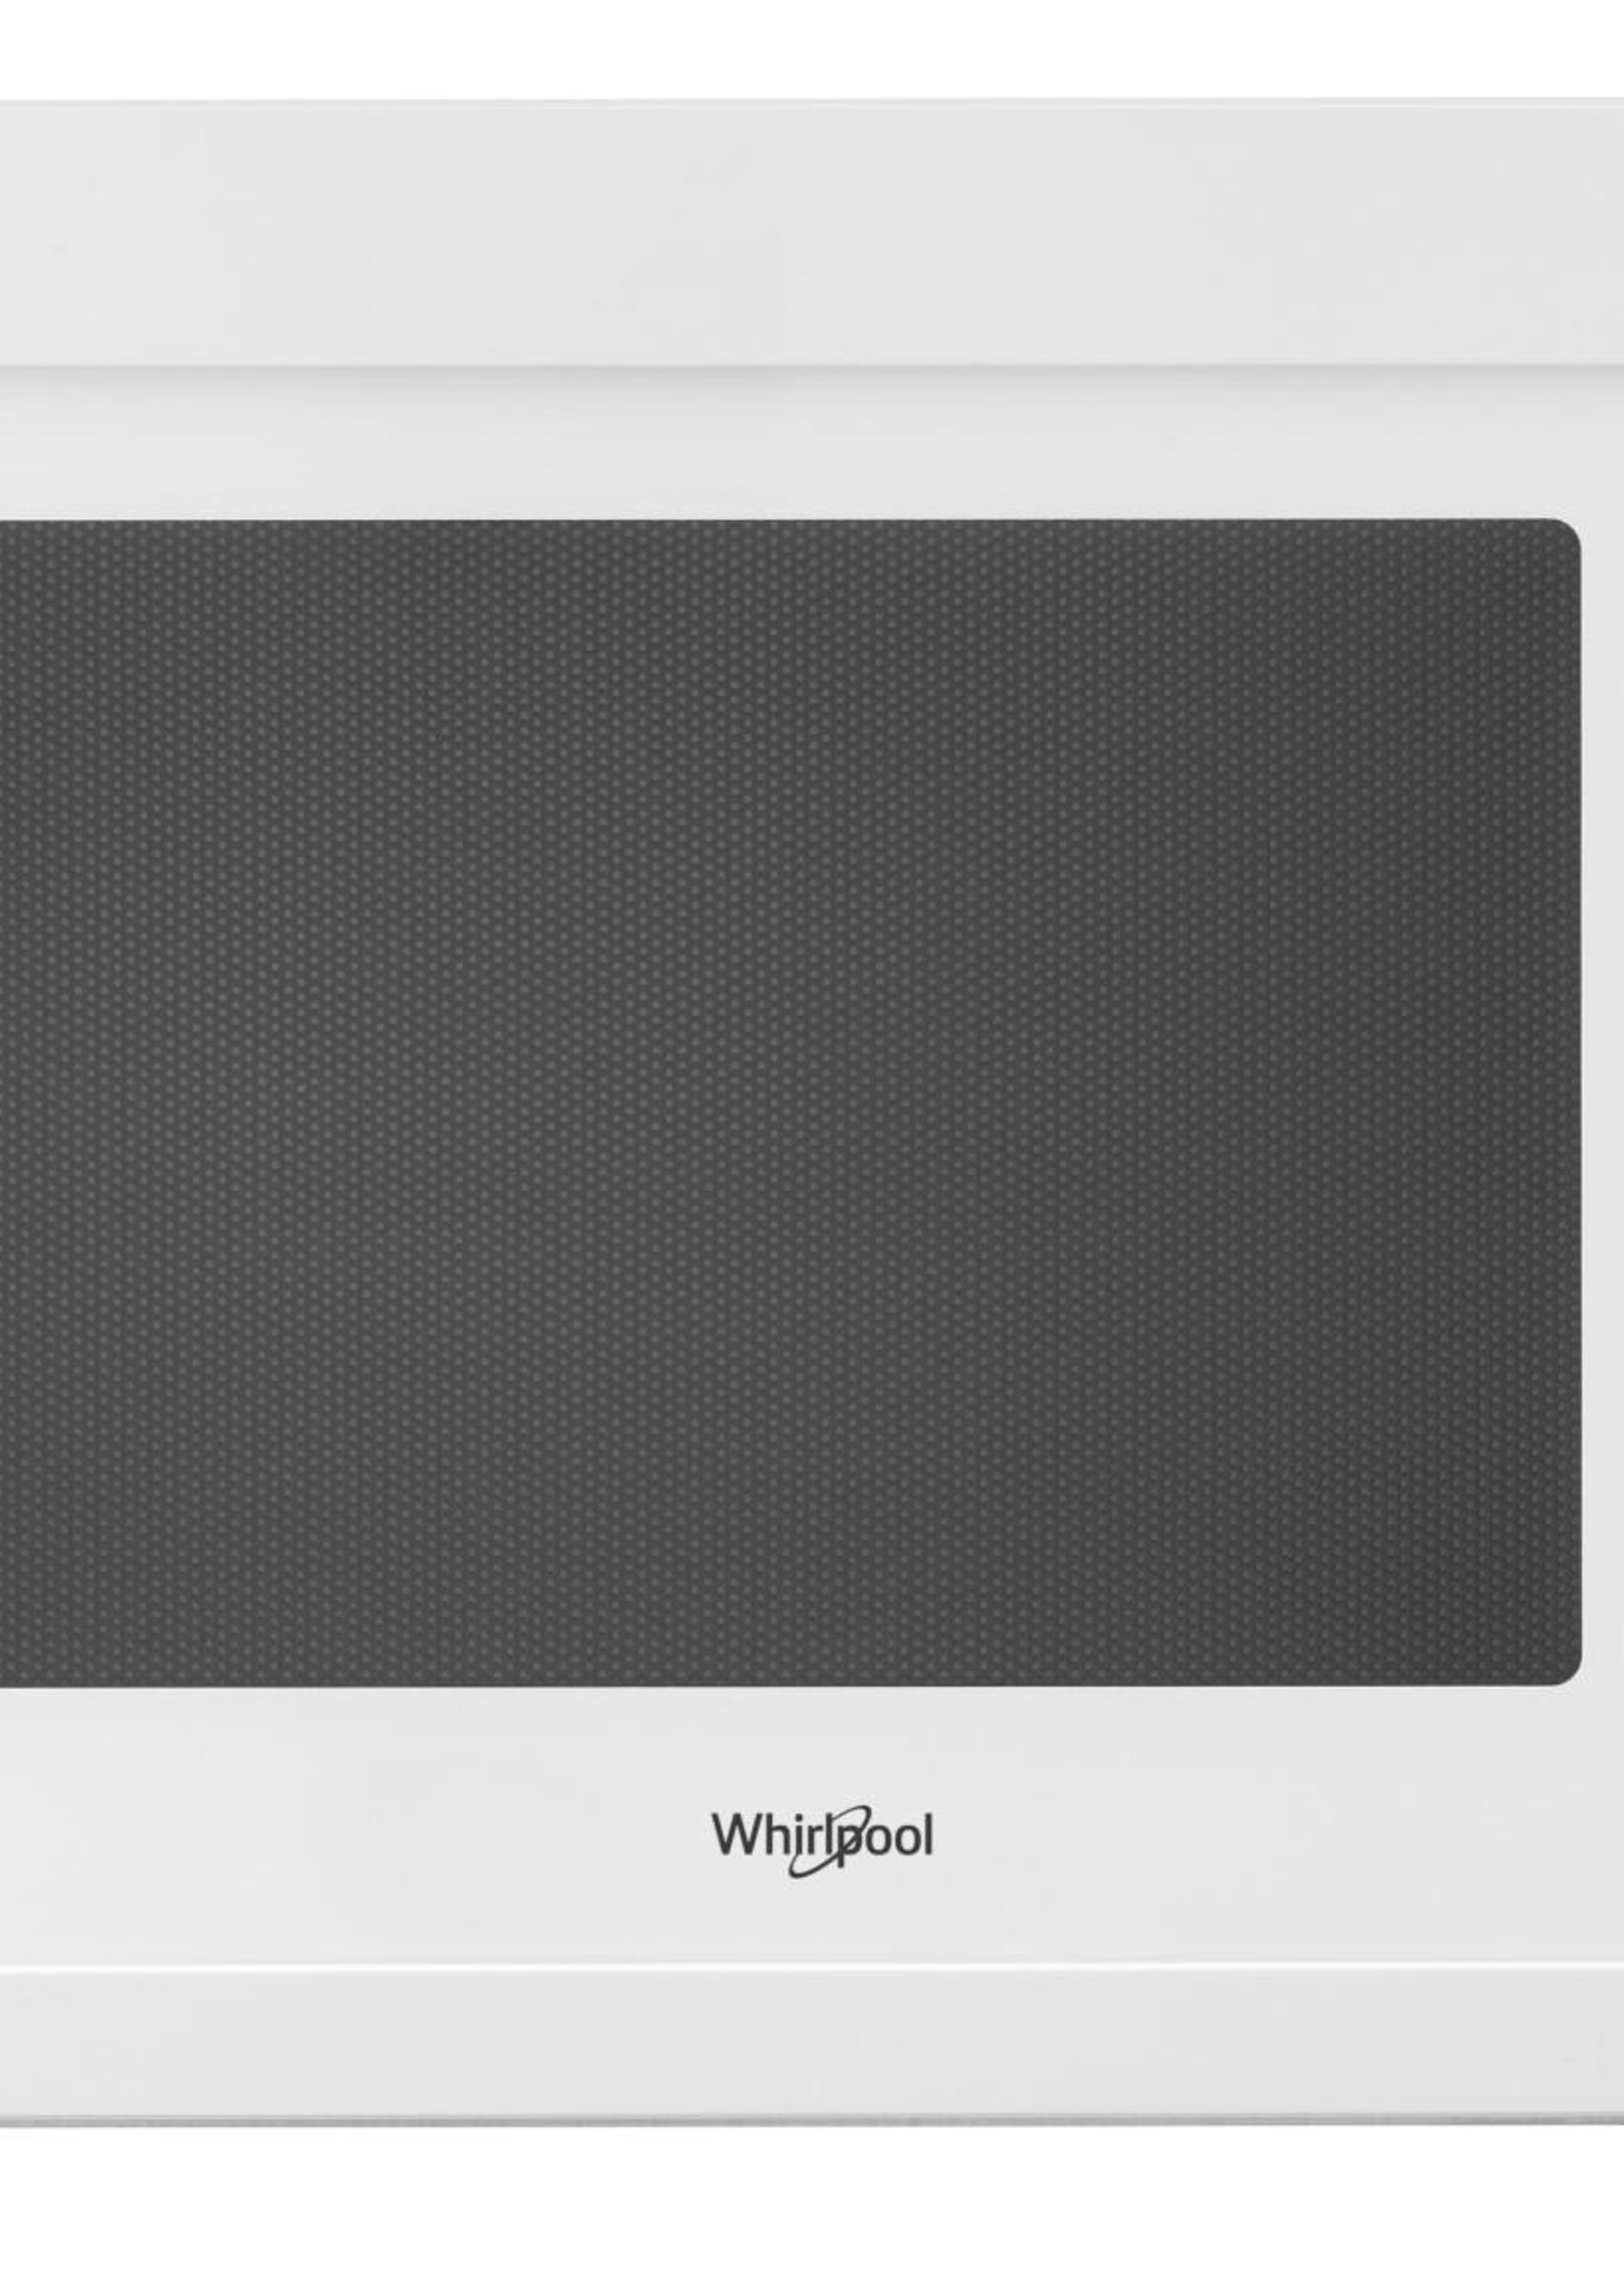 Whirlpool * WHIRLPOOL   WMC50522HW    2.2 Cu. Ft. Microwave with Sensor Cooking - White